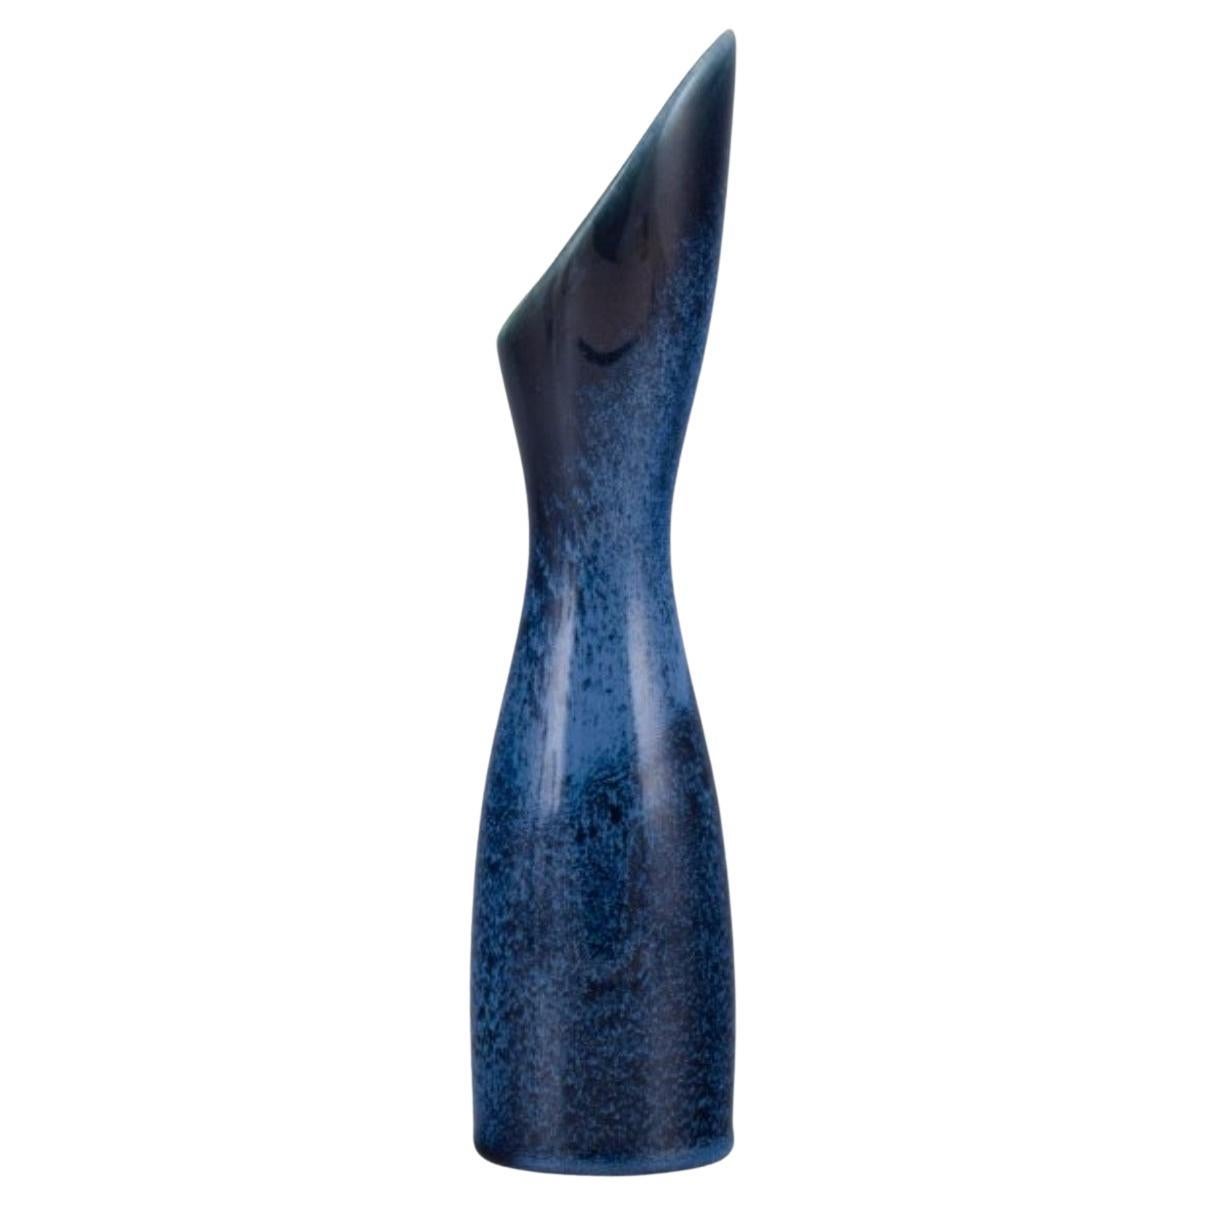 Stig Lindberg for Gustavsberg. "Azur" ceramic vase, ca 1970 For Sale